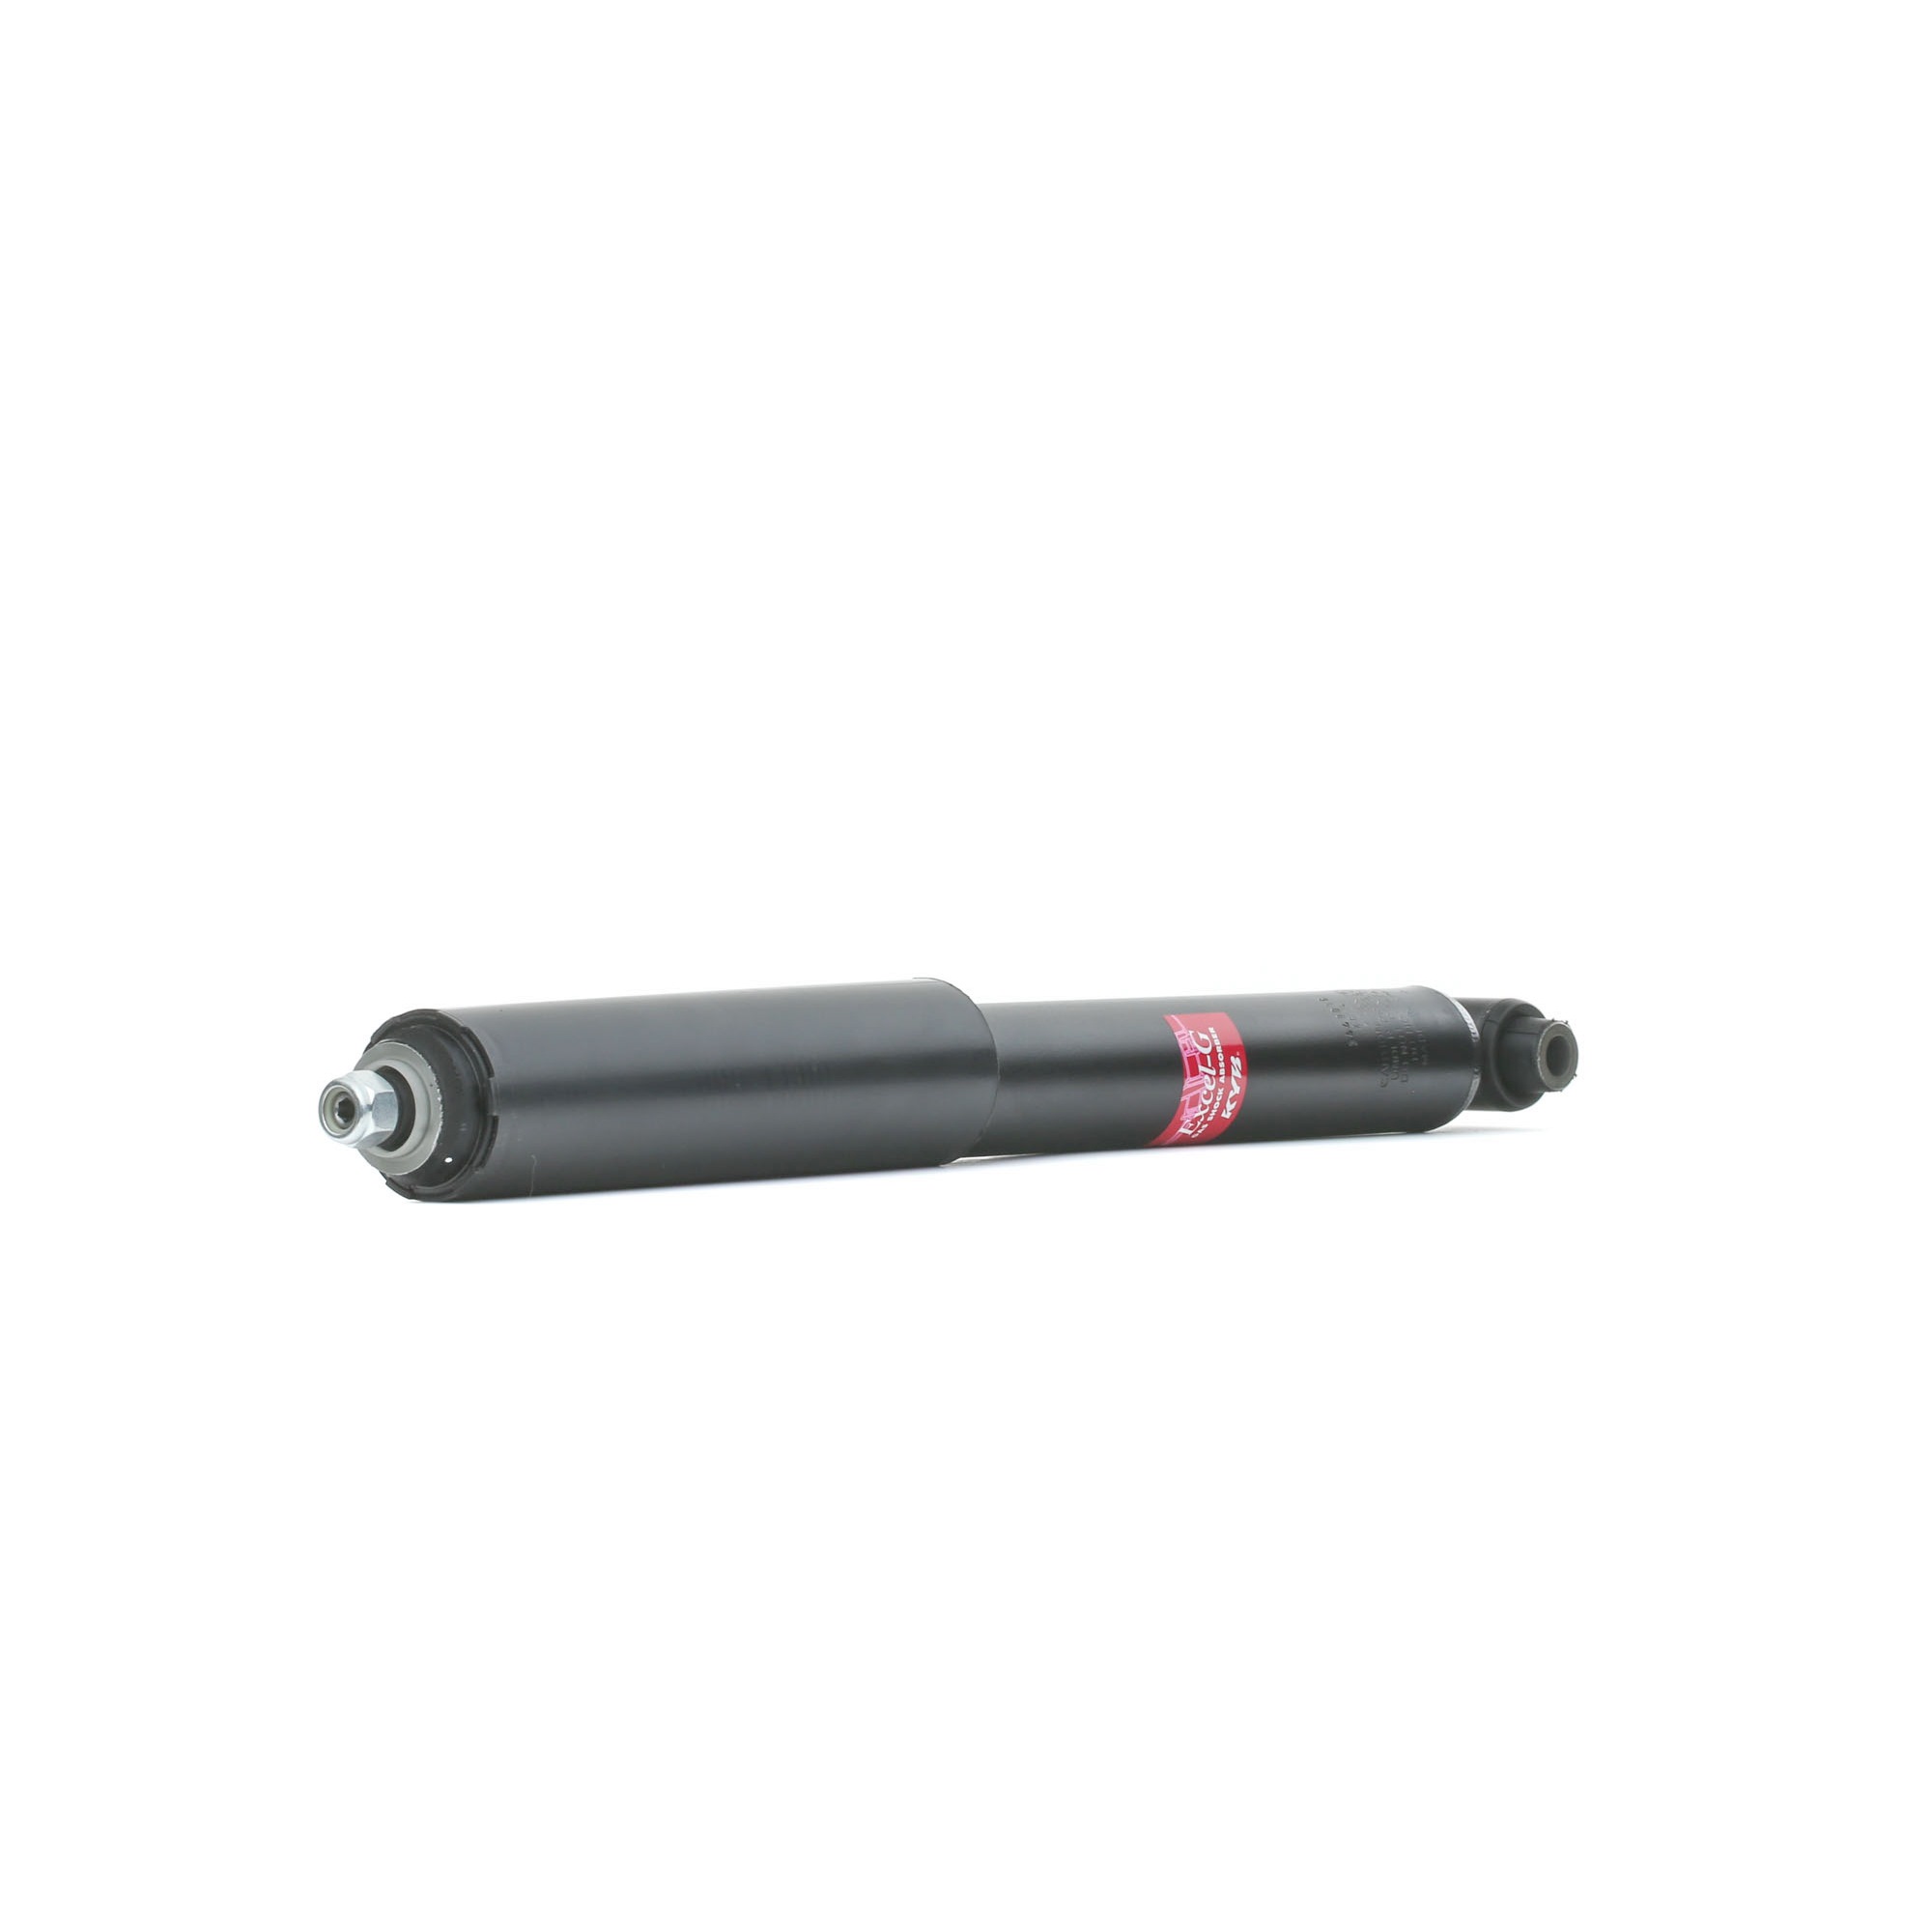 KYB Excel-G 3448016 Shock absorber Rear Axle, Gas Pressure, Twin-Tube, Telescopic Shock Absorber, Top pin, Bottom eye